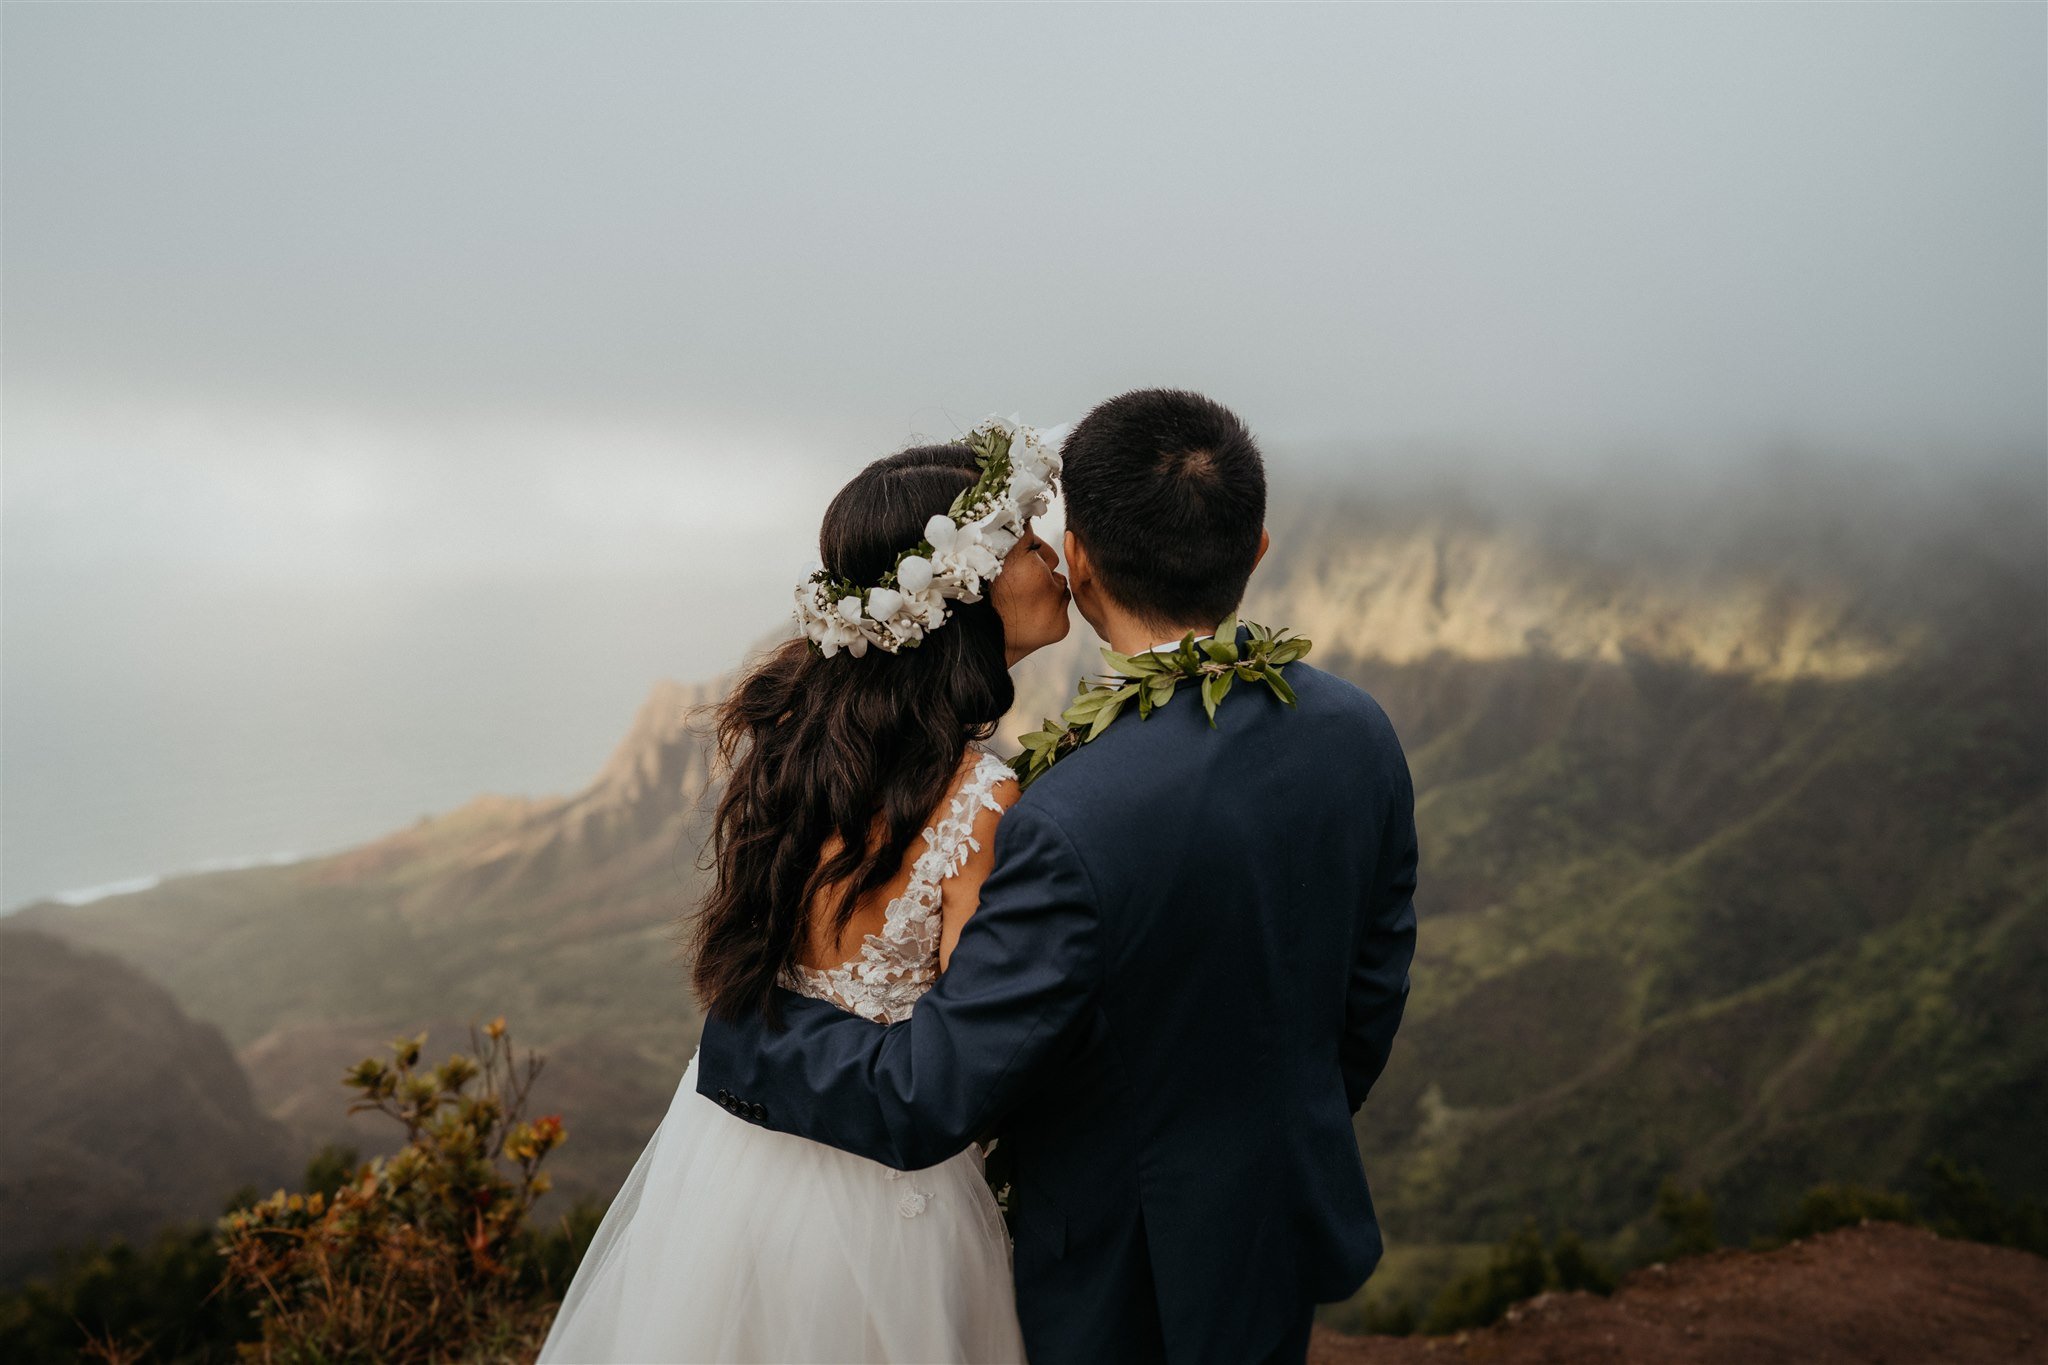 Bride kissing groom at mountain overlook in Kauai